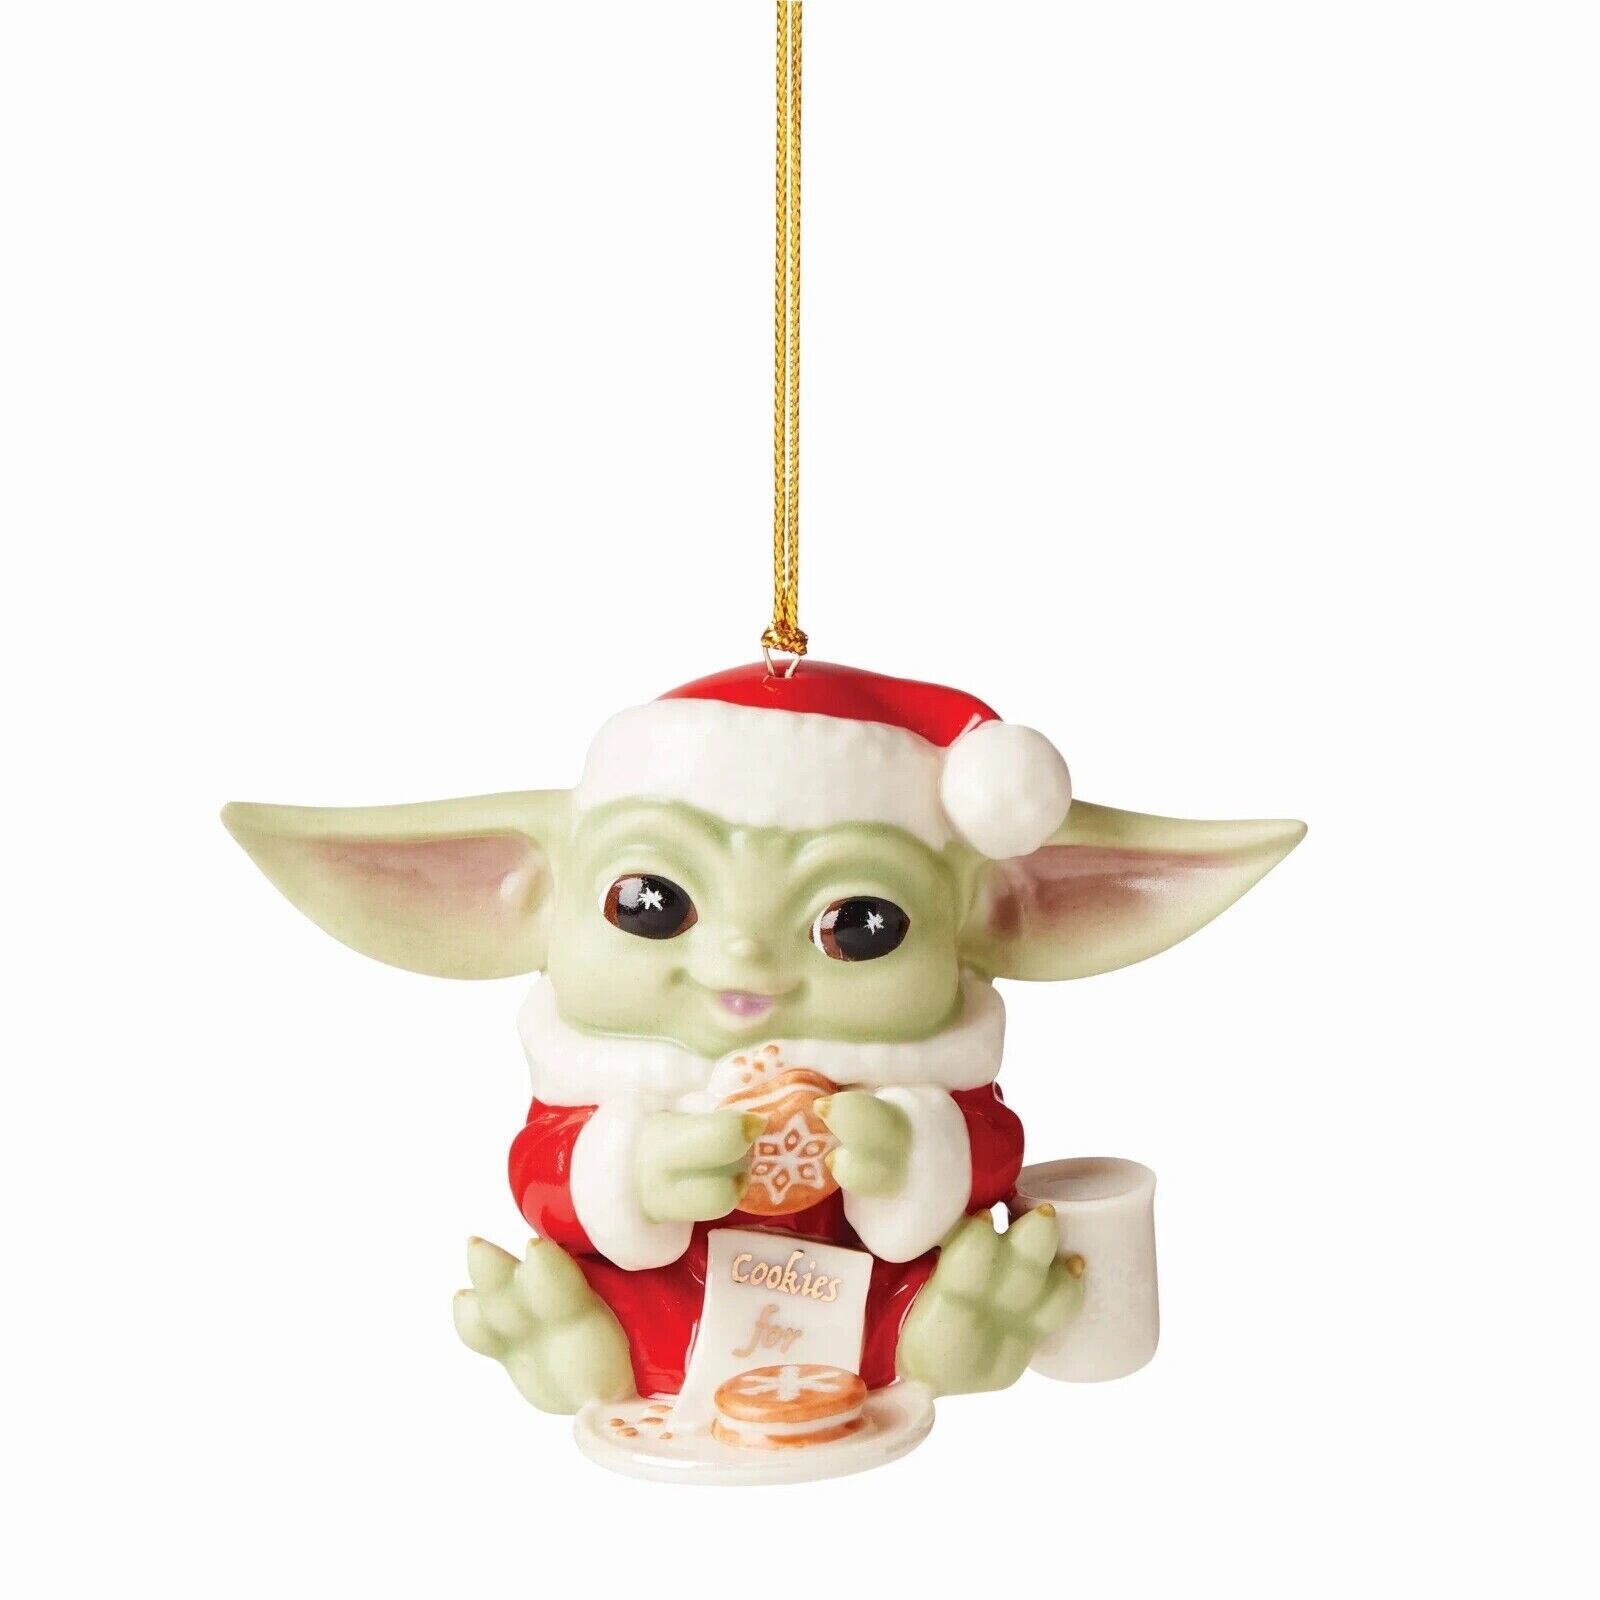 Primary image for Lenox Disney Darth Vadar Ornament Figurine Candy Cane Star Wars Christmas NEW